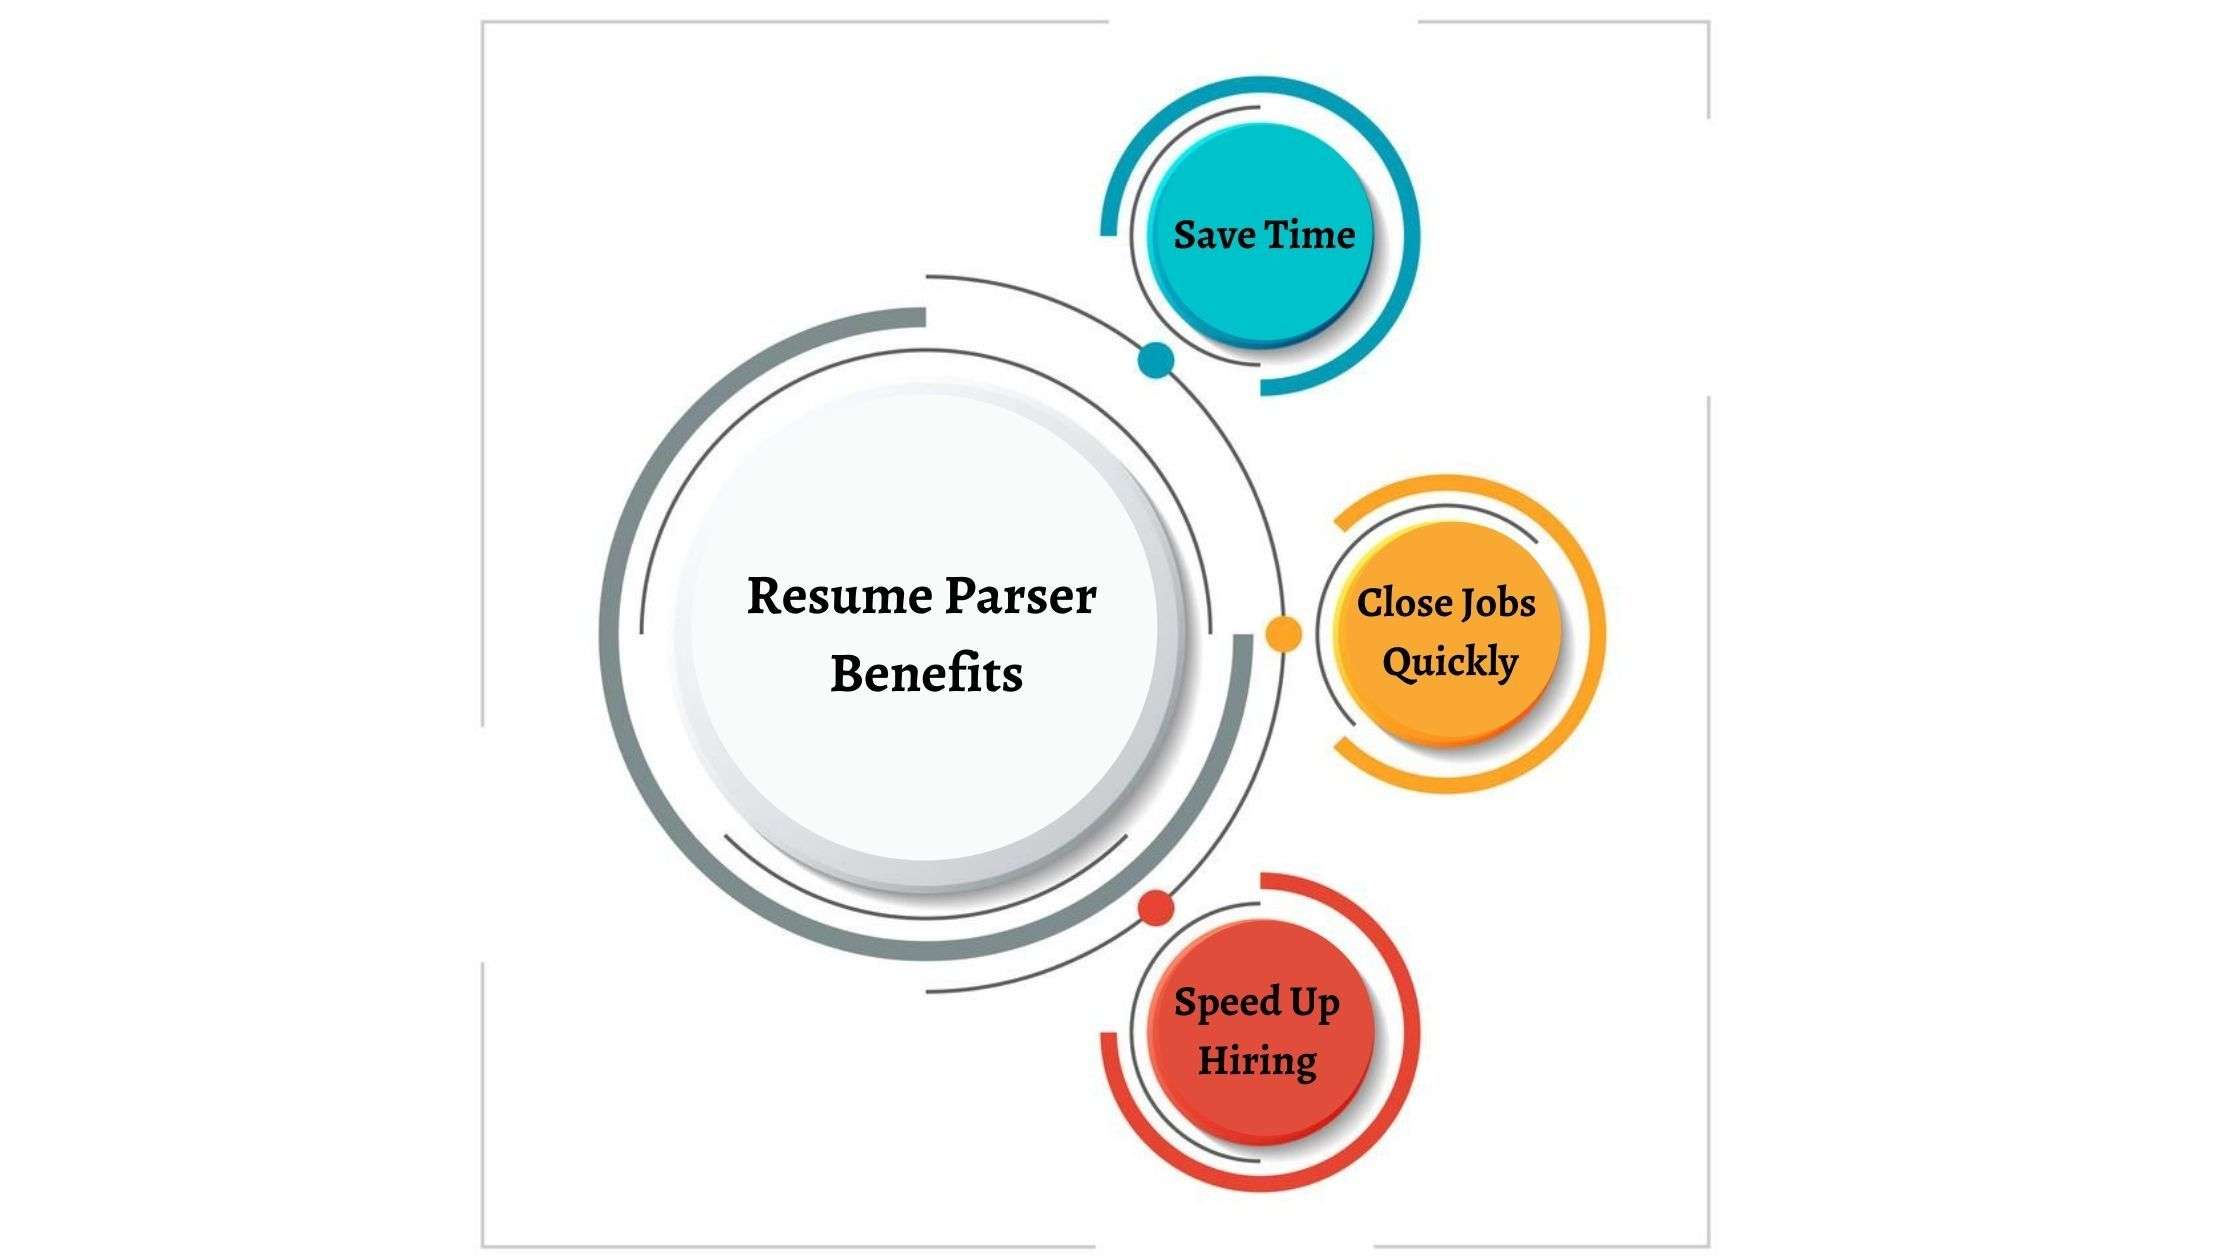 Resume Parser Benefits